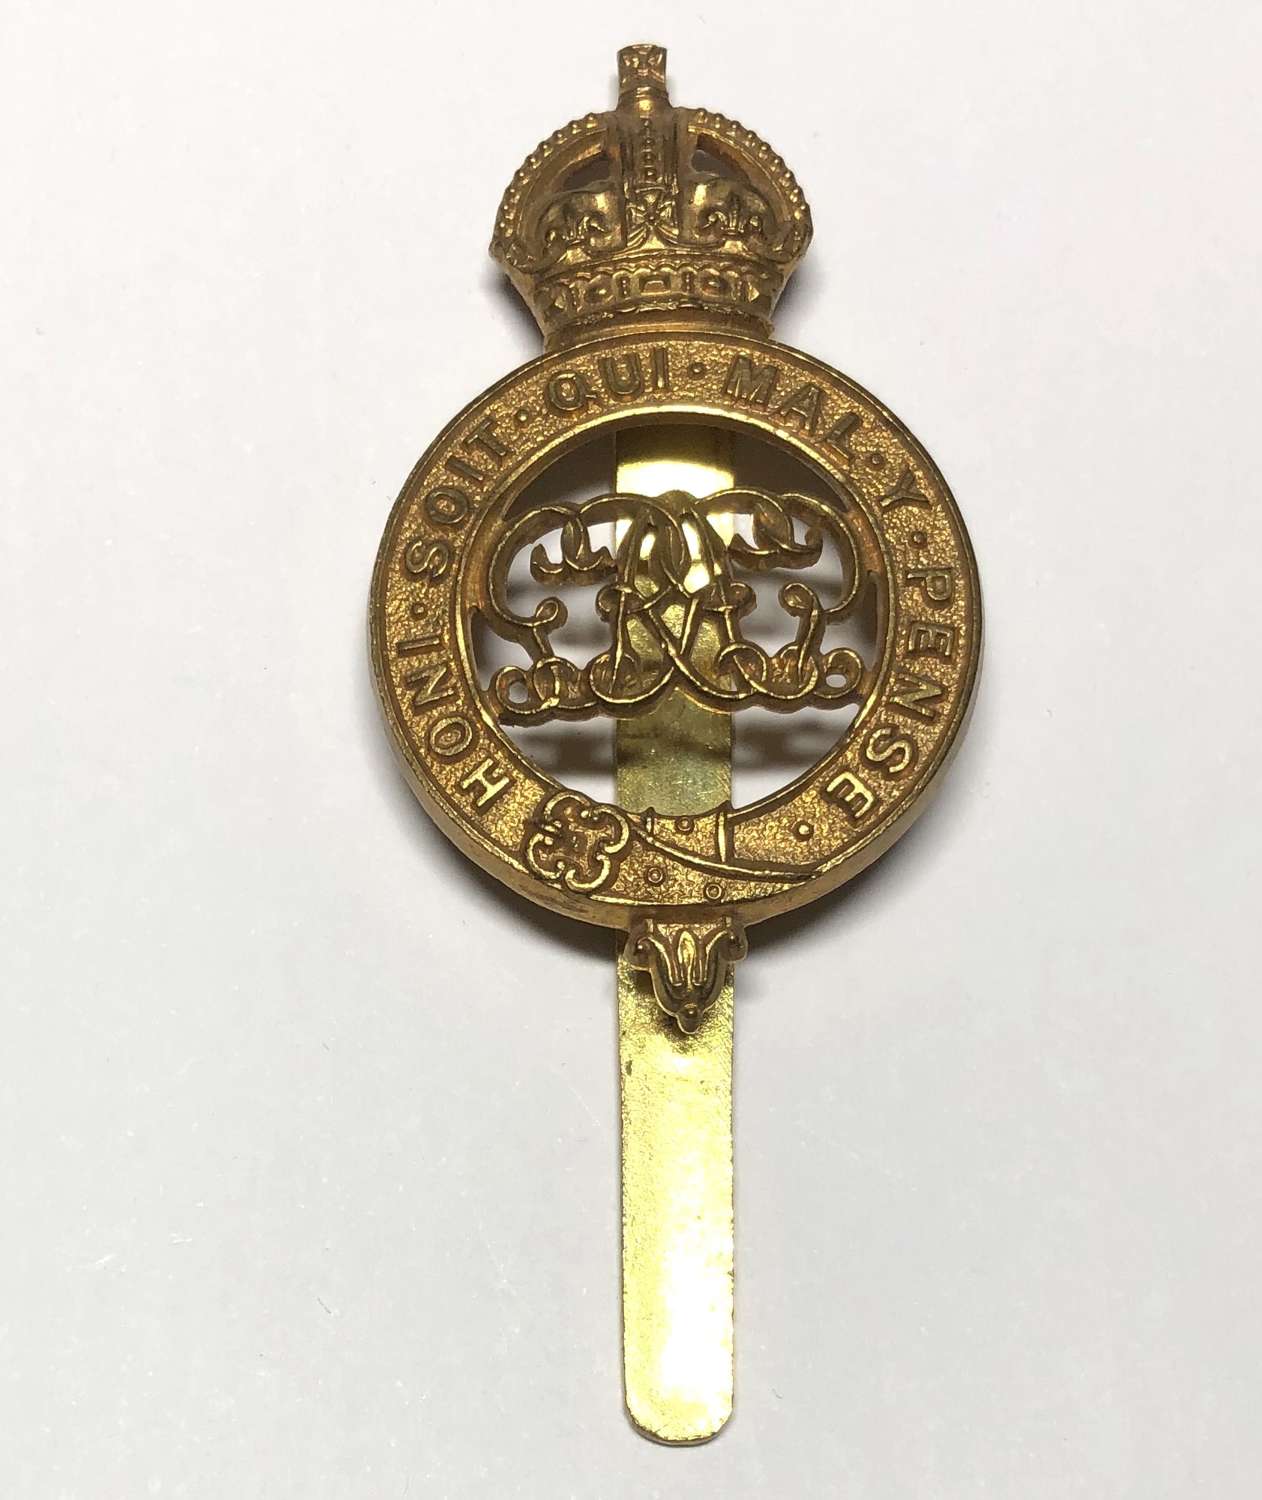 Grenadier Guards George V pagri badge circa 1910-35 by Firmin